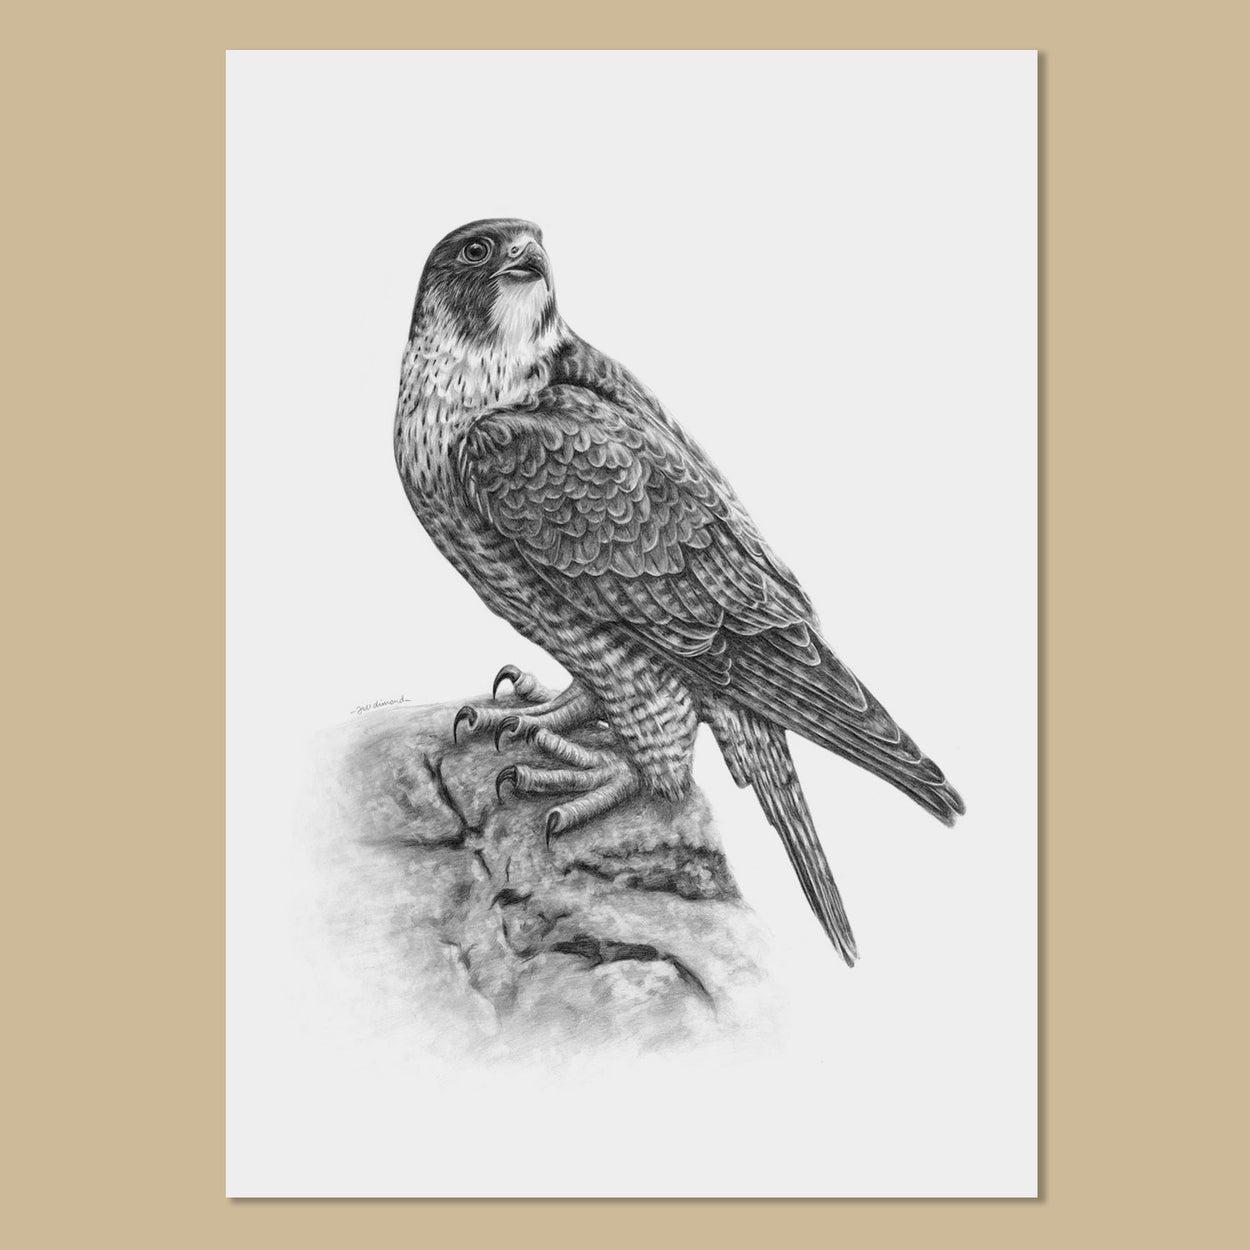 Peregrine Falcon Art Prints - The Thriving Wild - Jill Dimond